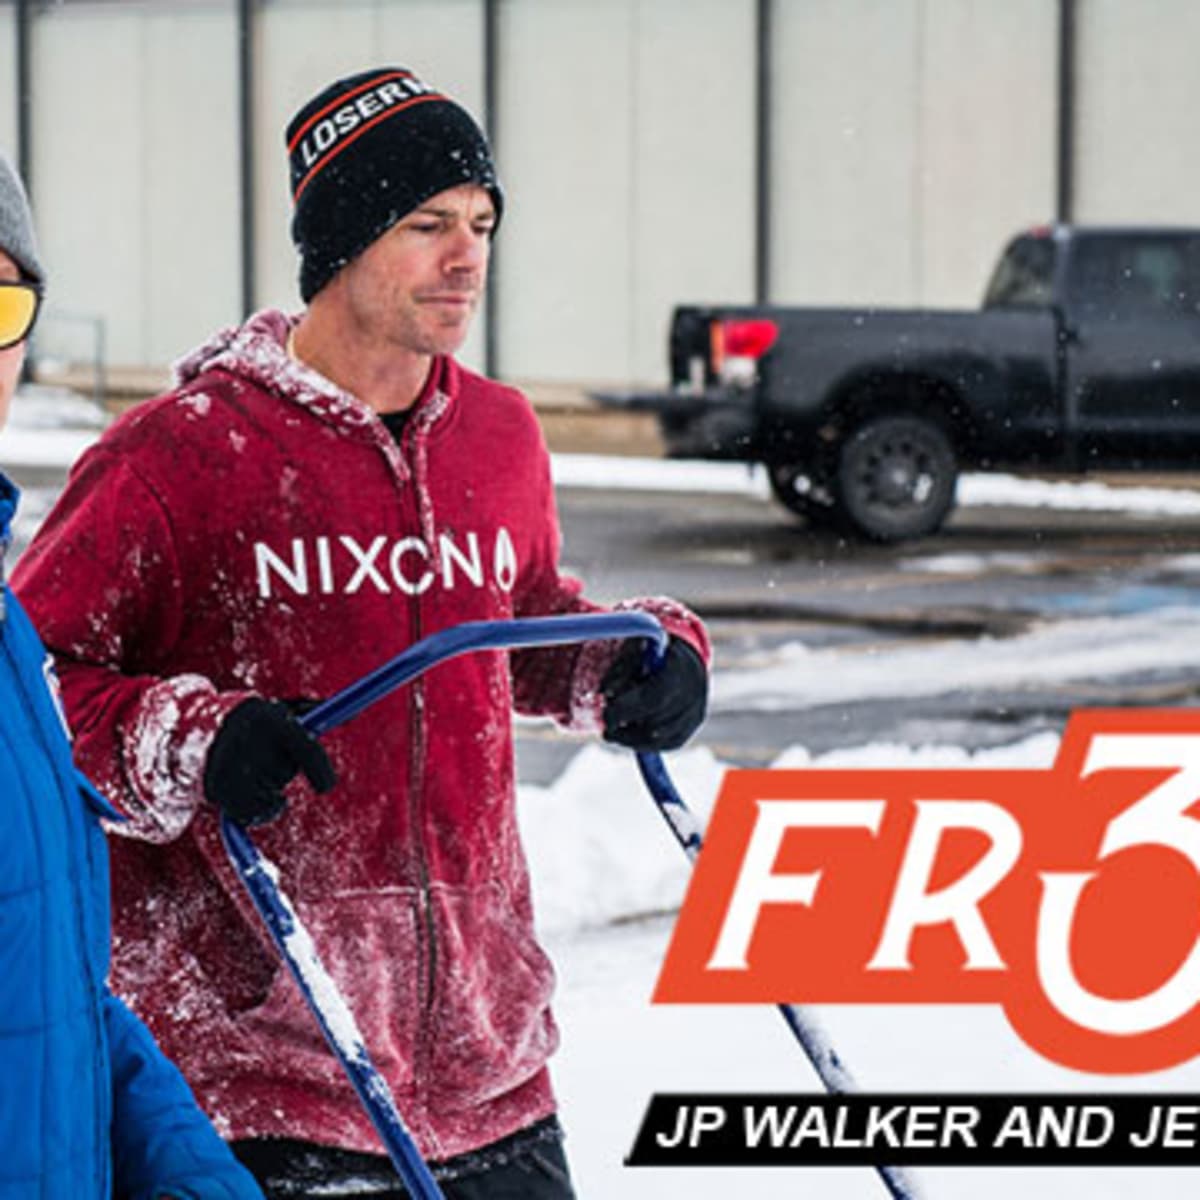 Front 3: Jeremy Jones and JP Walker - Snowboarder